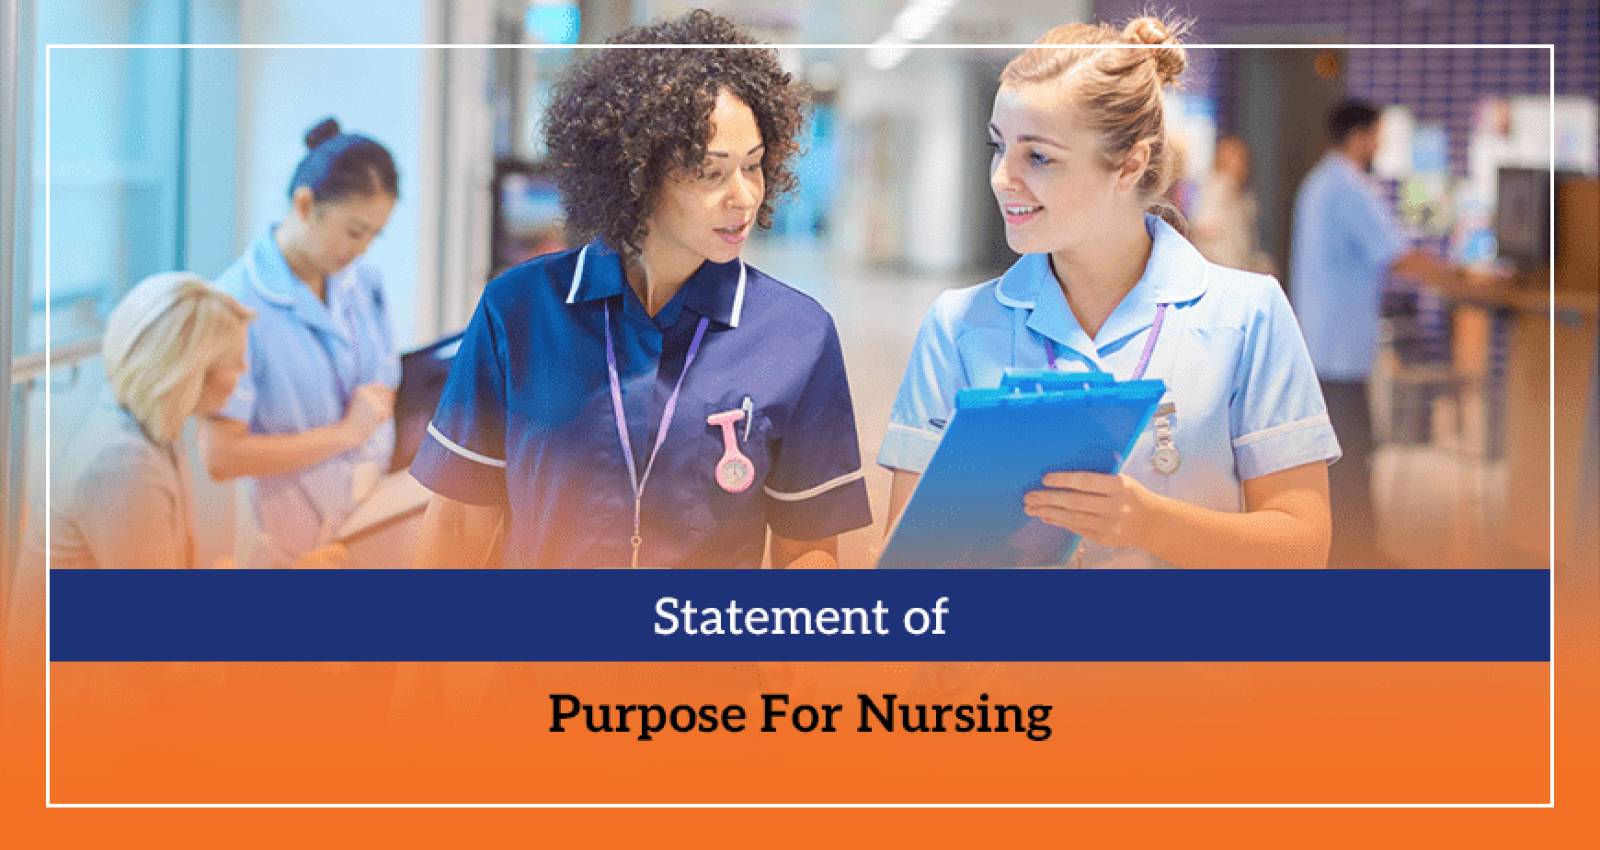 Statement of Purpose For Nursing